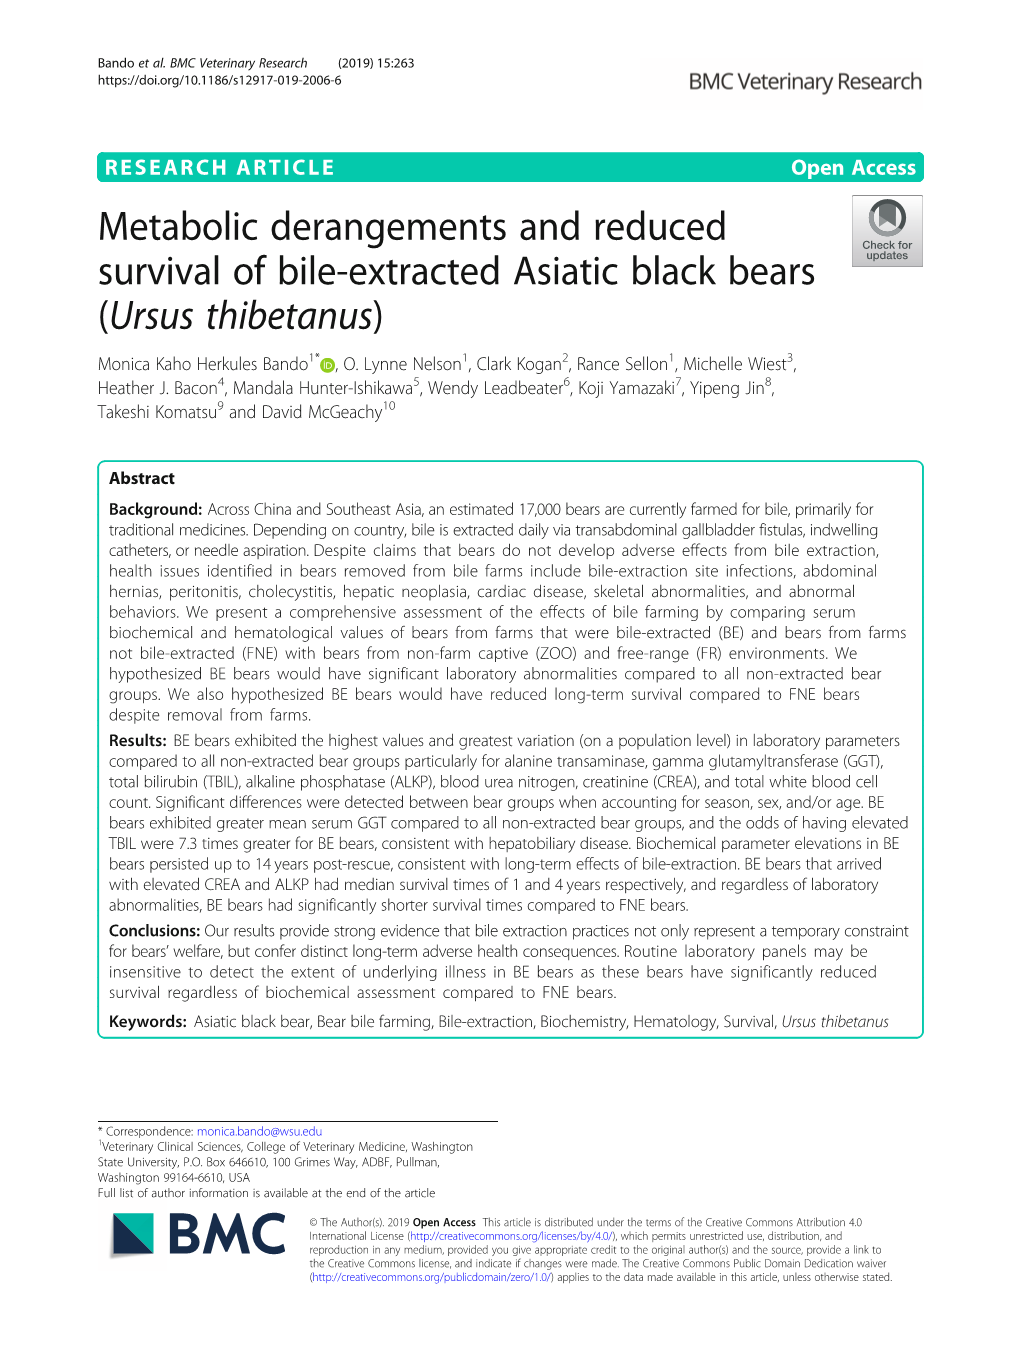 Metabolic Derangements and Reduced Survival of Bile-Extracted Asiatic Black Bears (Ursus Thibetanus) Monica Kaho Herkules Bando1* , O